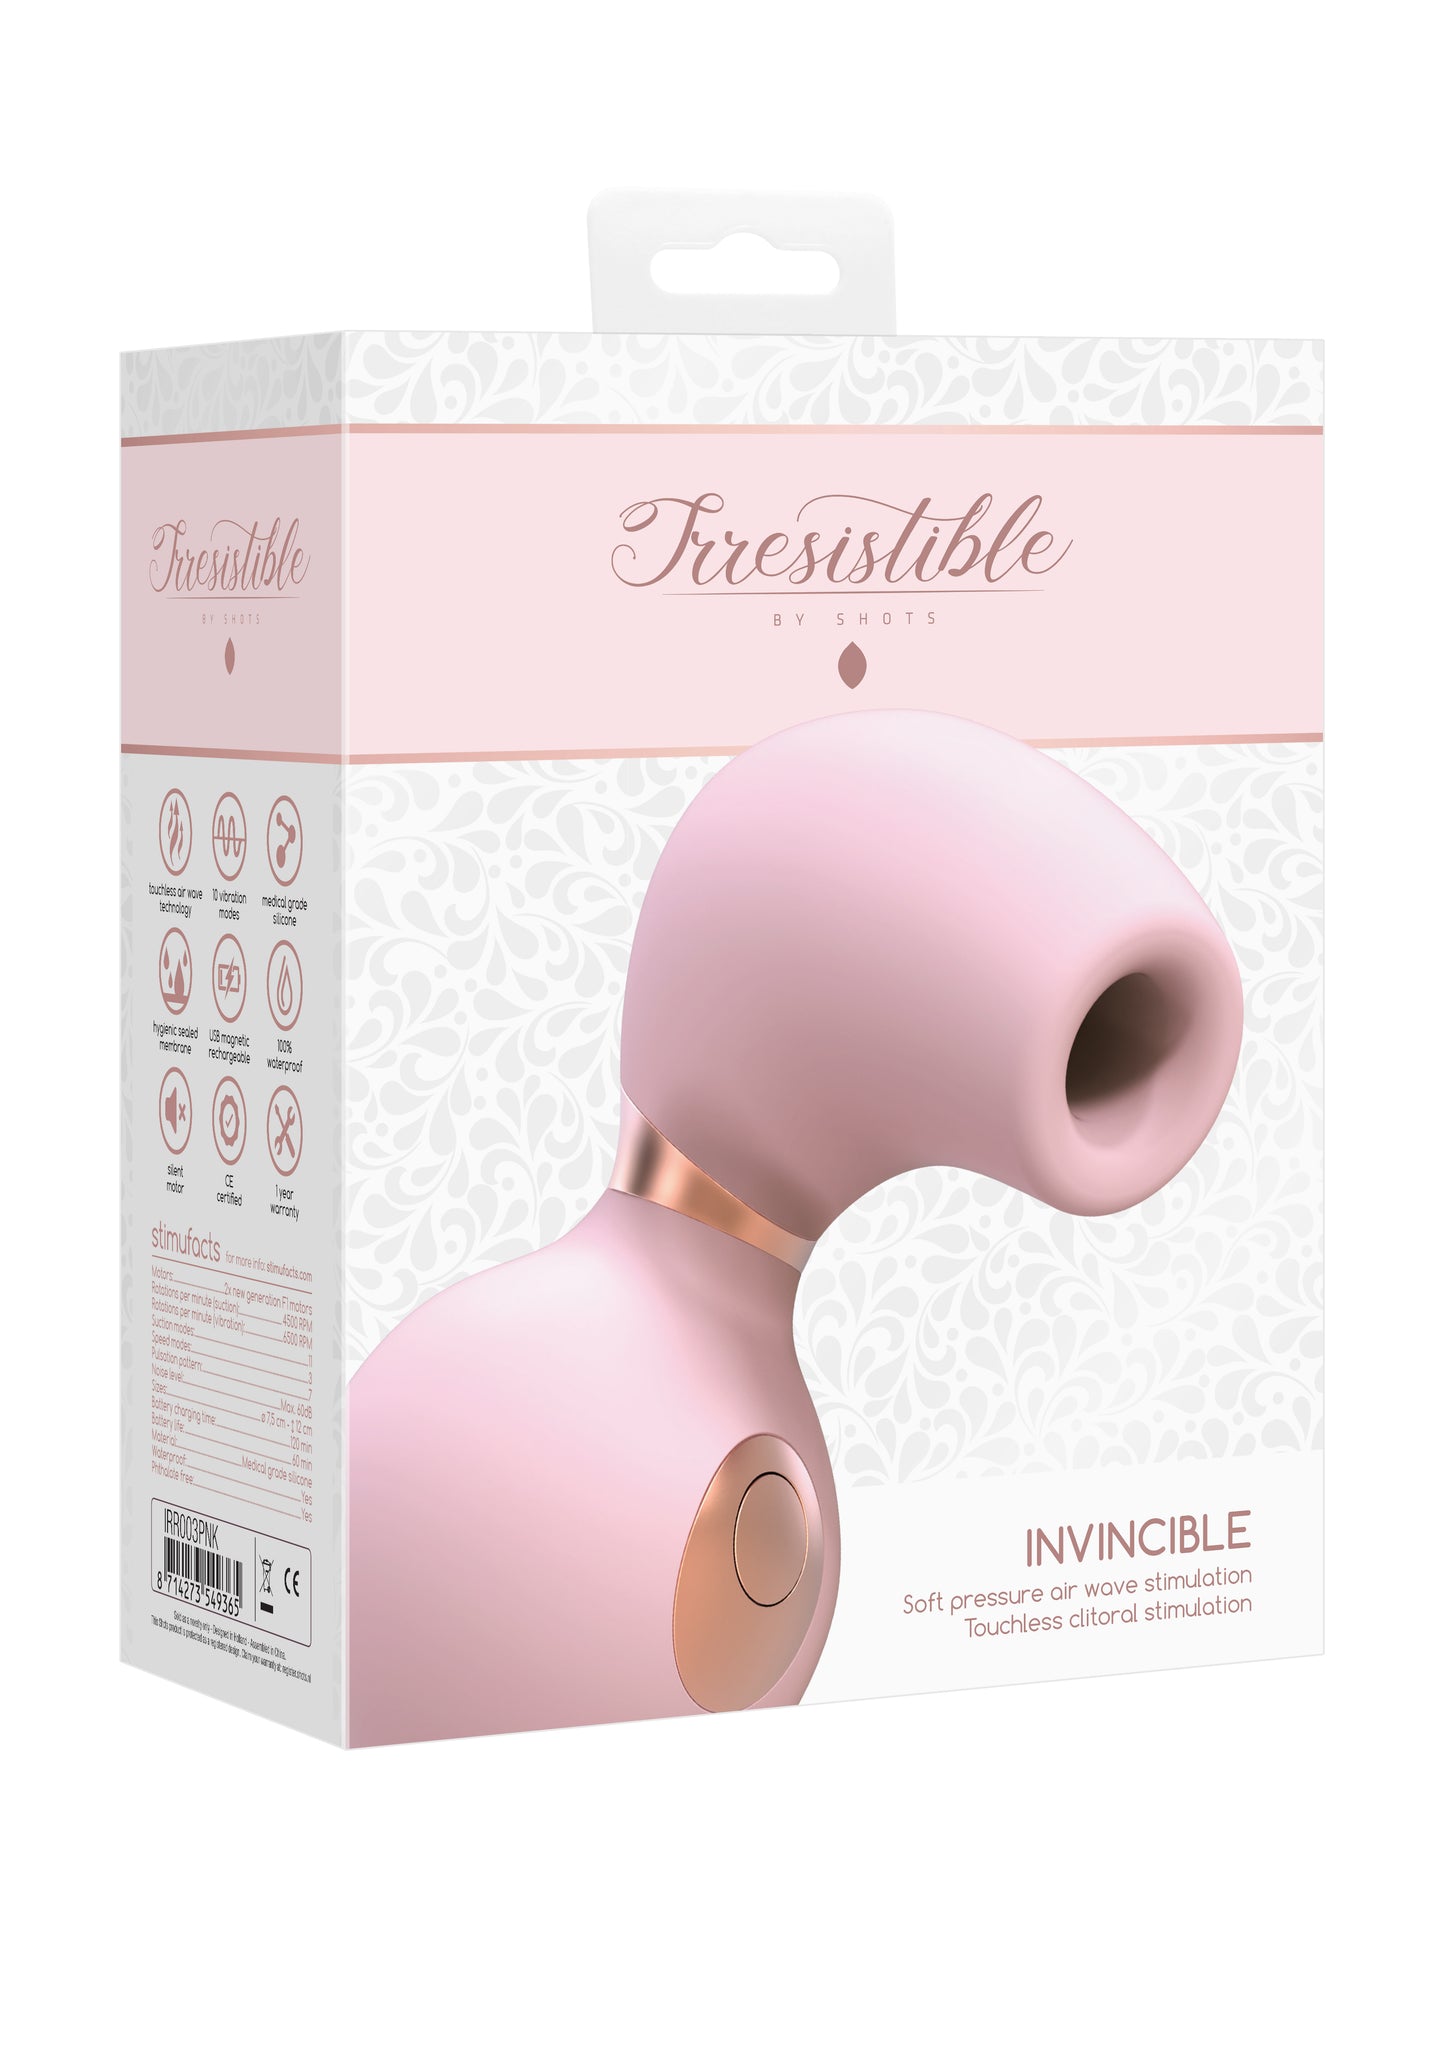 The Irresistible Collection Invincible Air Pulse Vibrator